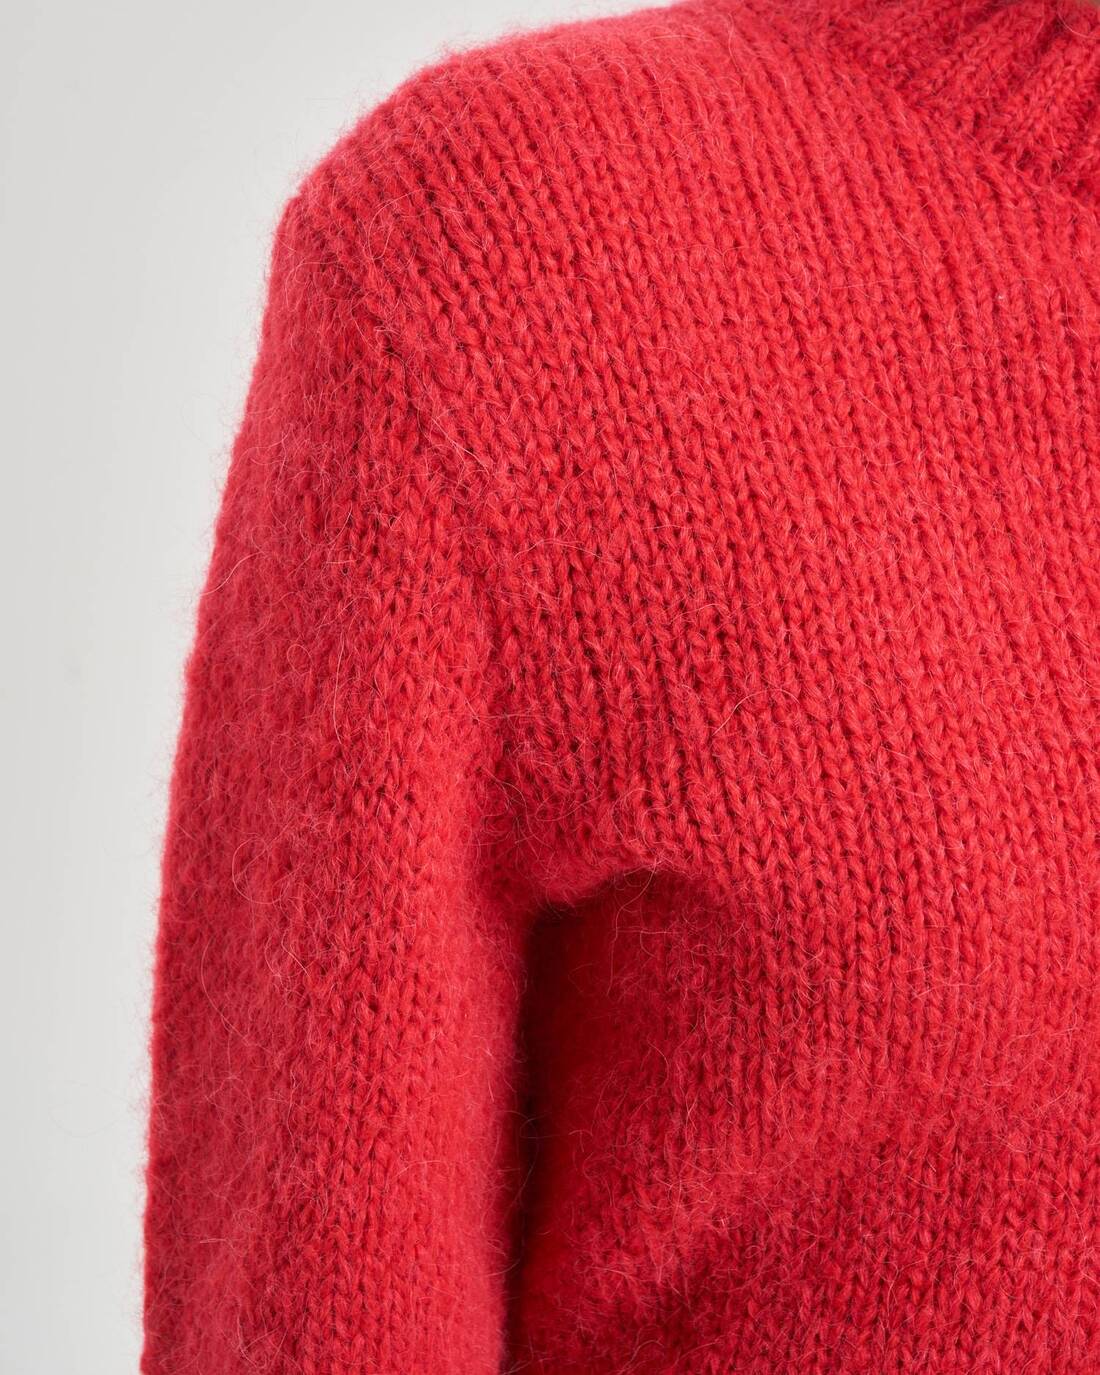 Cropped alpaca wool sweater